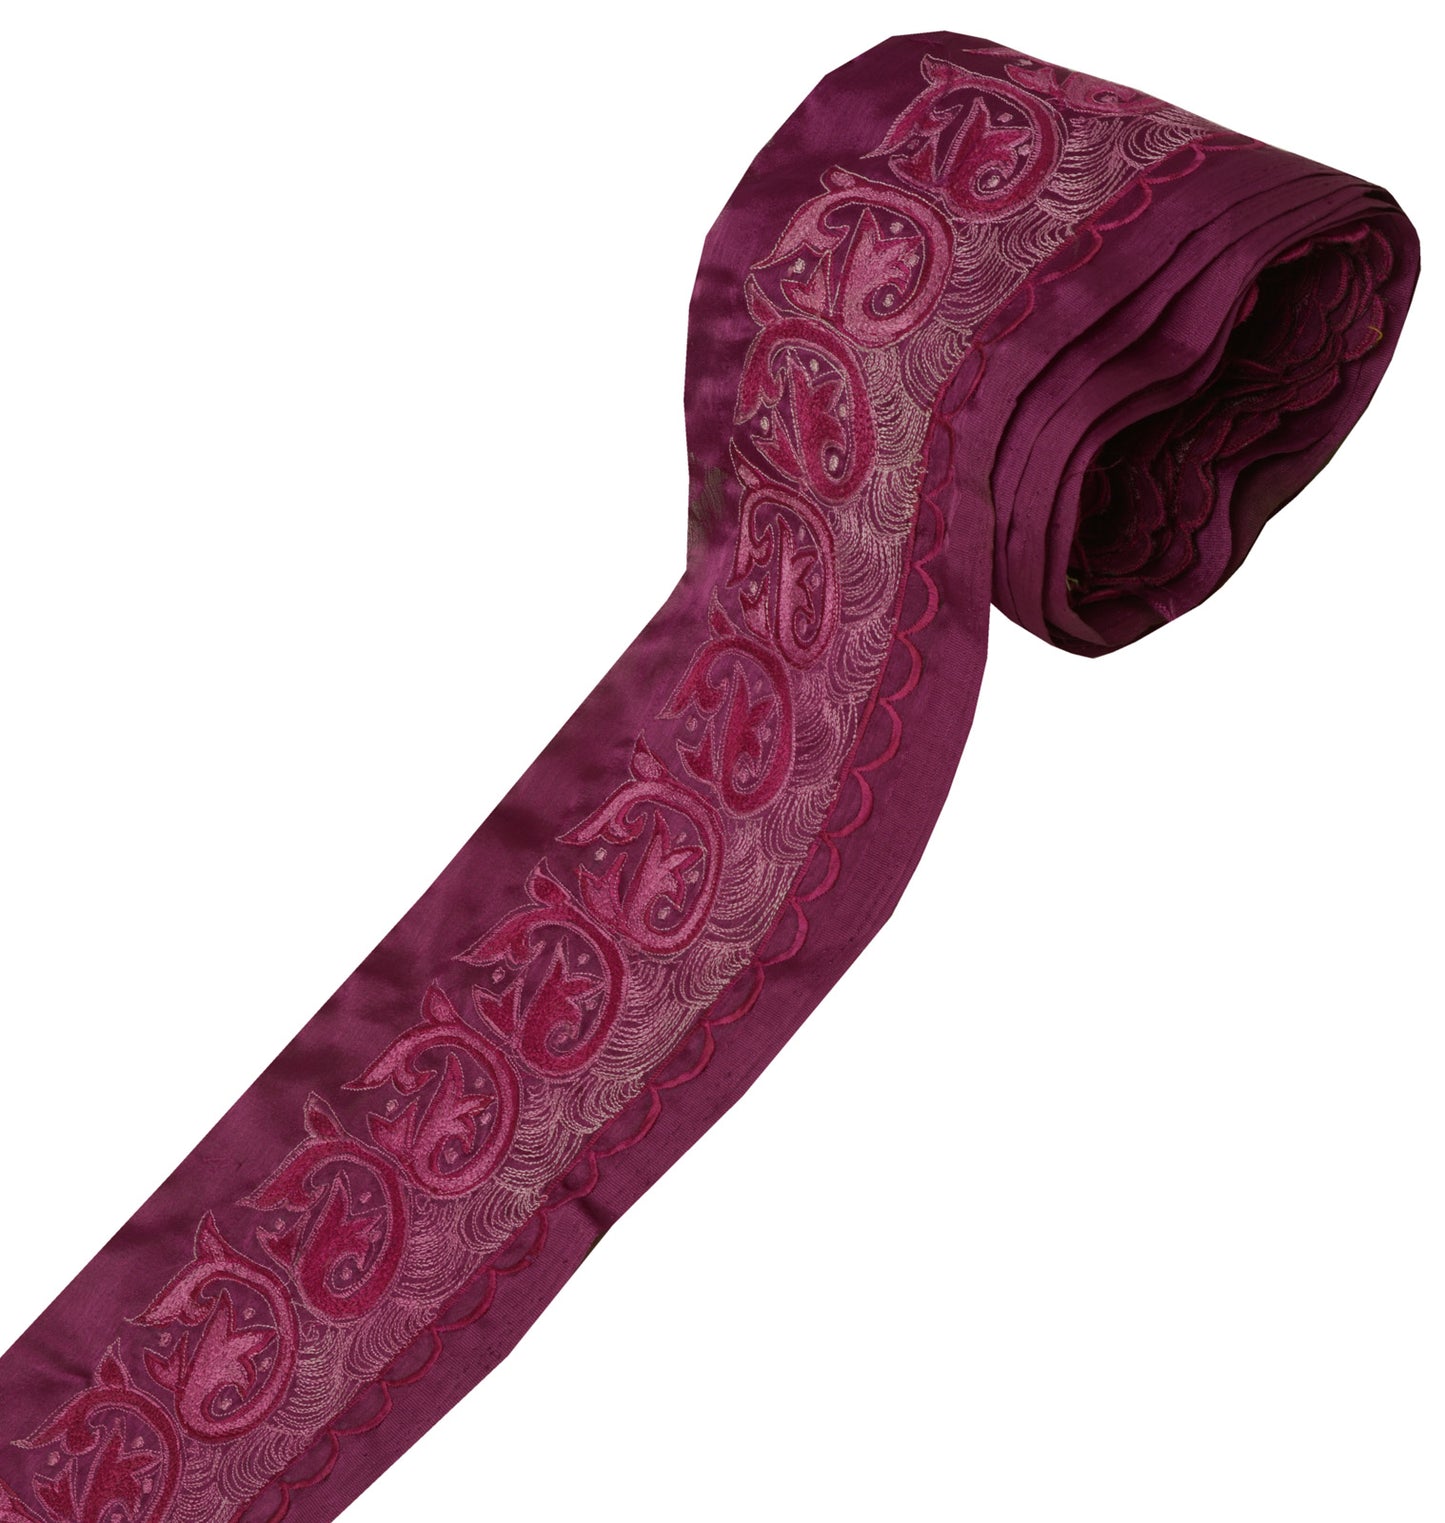 Sushila Vintage Purple Saree Border Indian Craft Sewing Trim Embroidered Ribbon